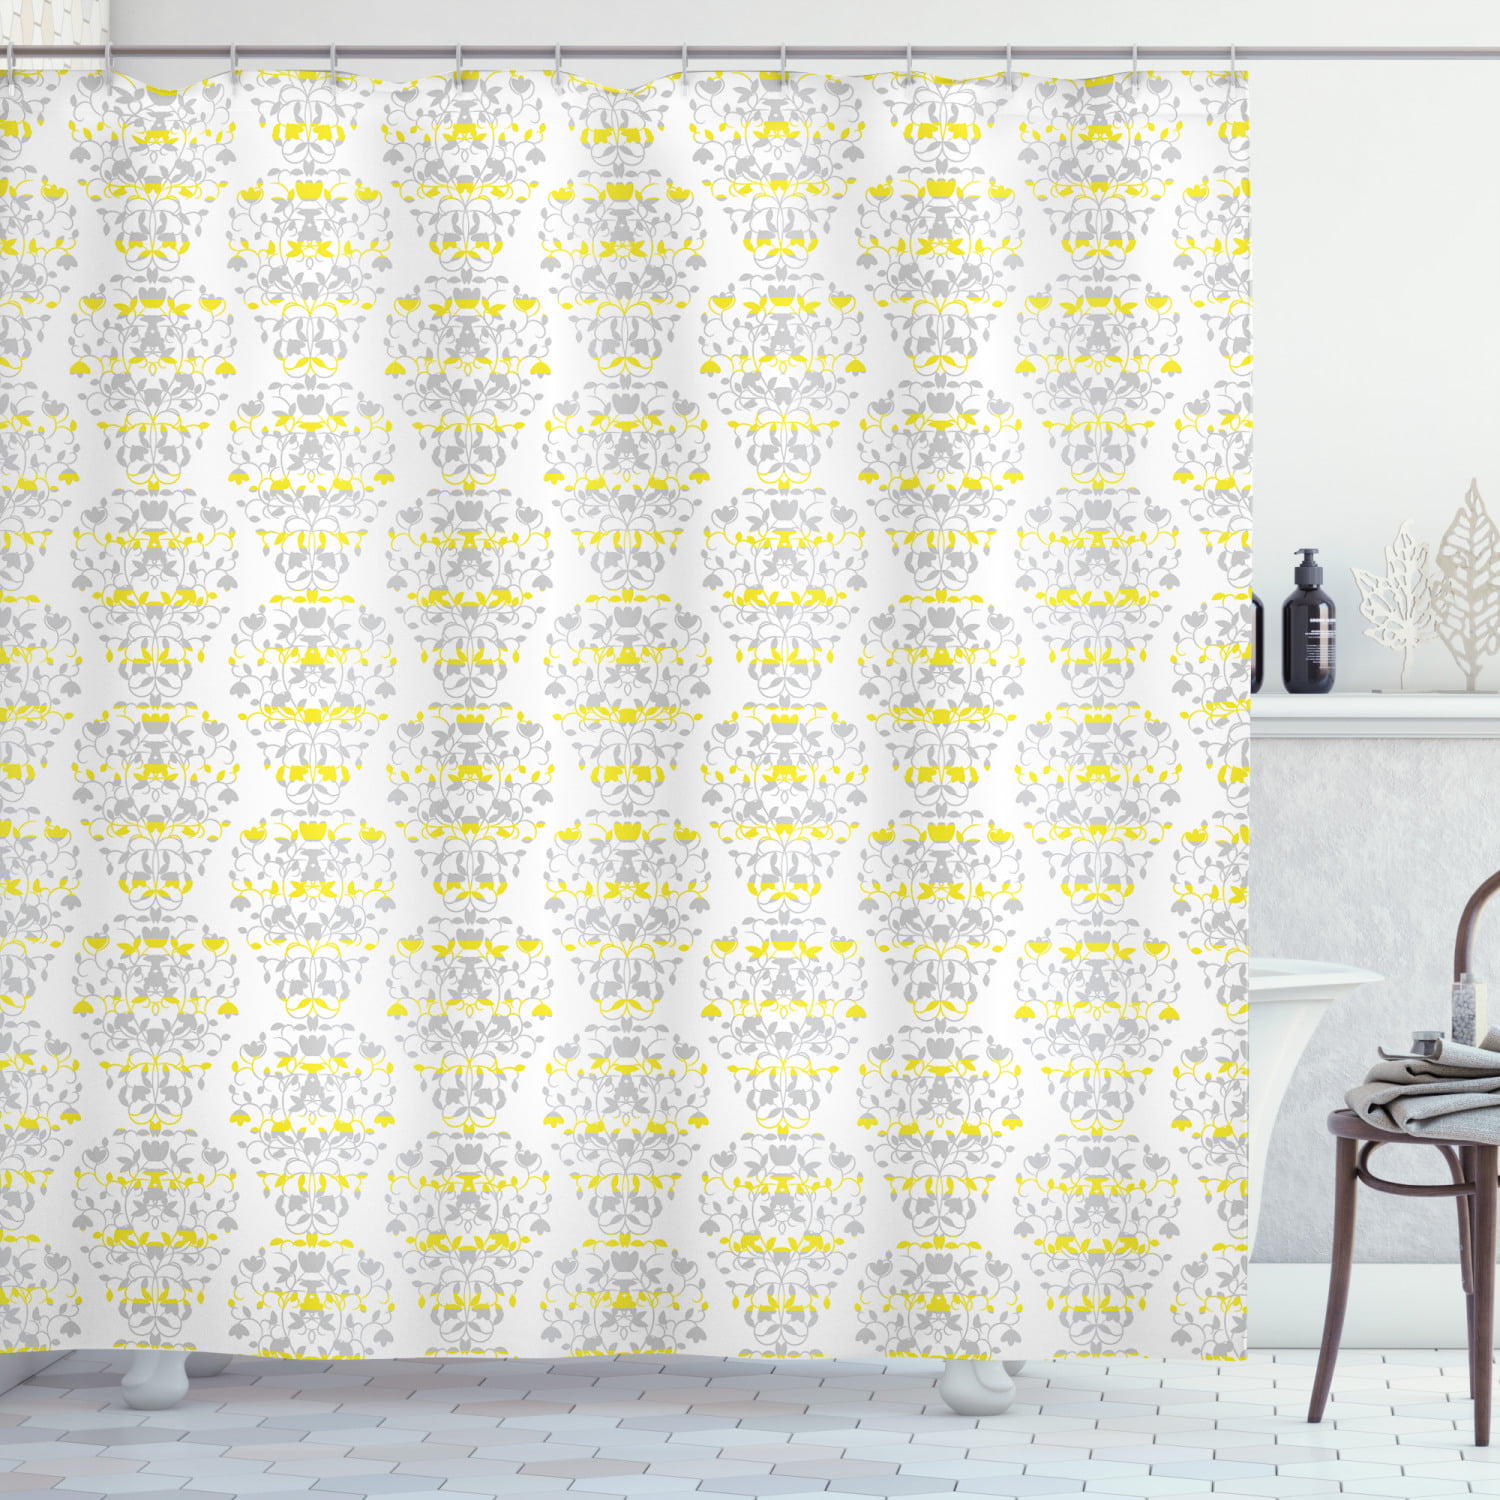 Gray board mandala flower Shower Shower Curtain Bathroom Decor Fabric & 12hooks 